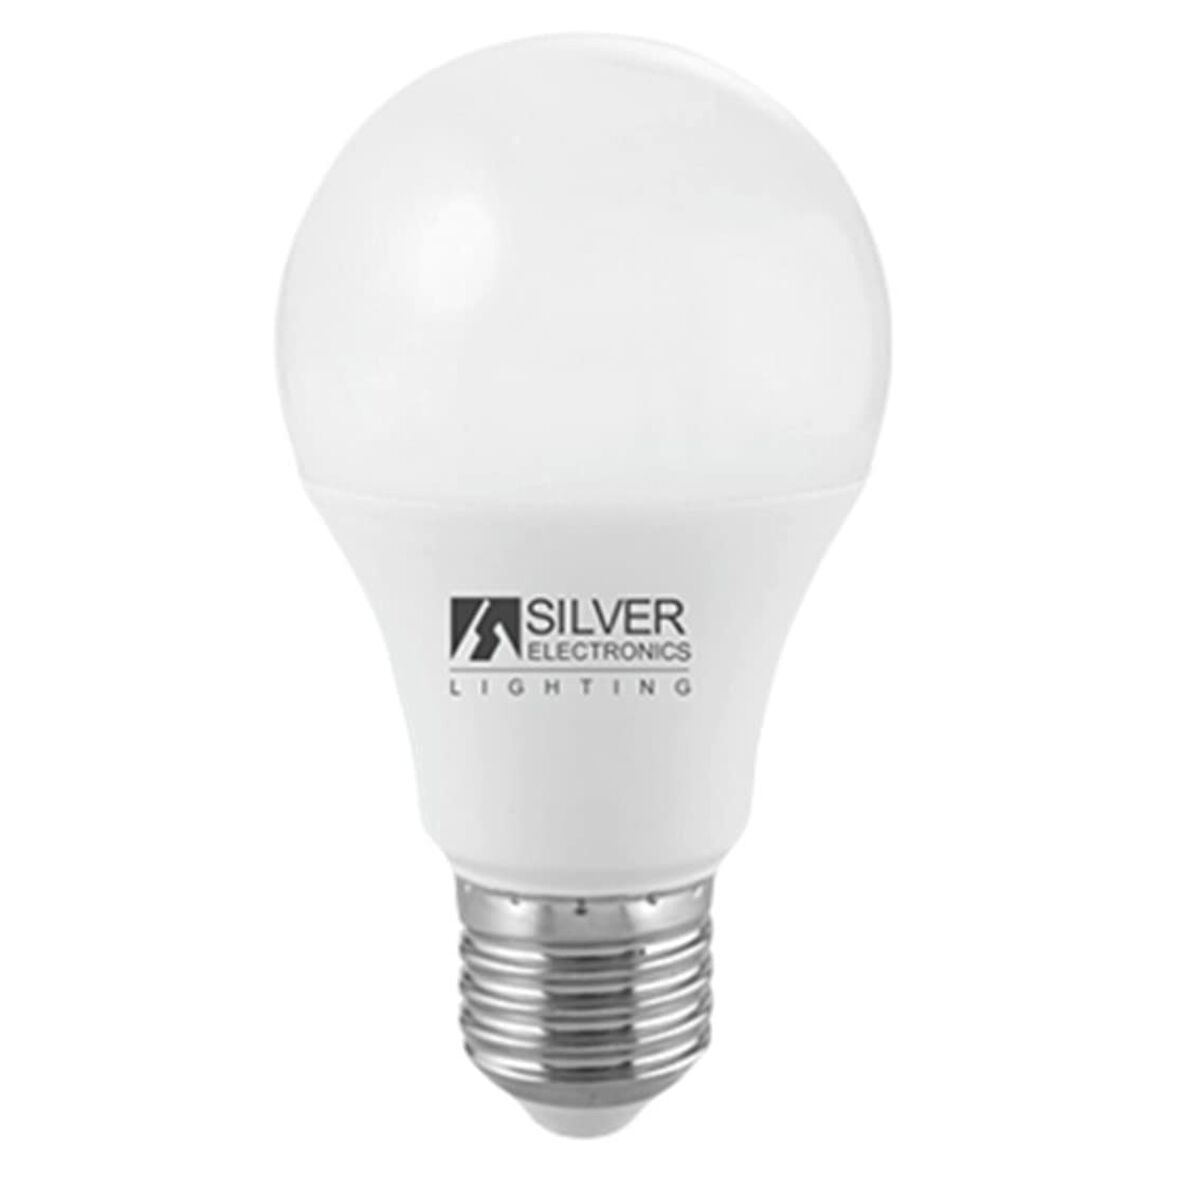 LED lamp Silver Electronics ECO ESTANDAR E27